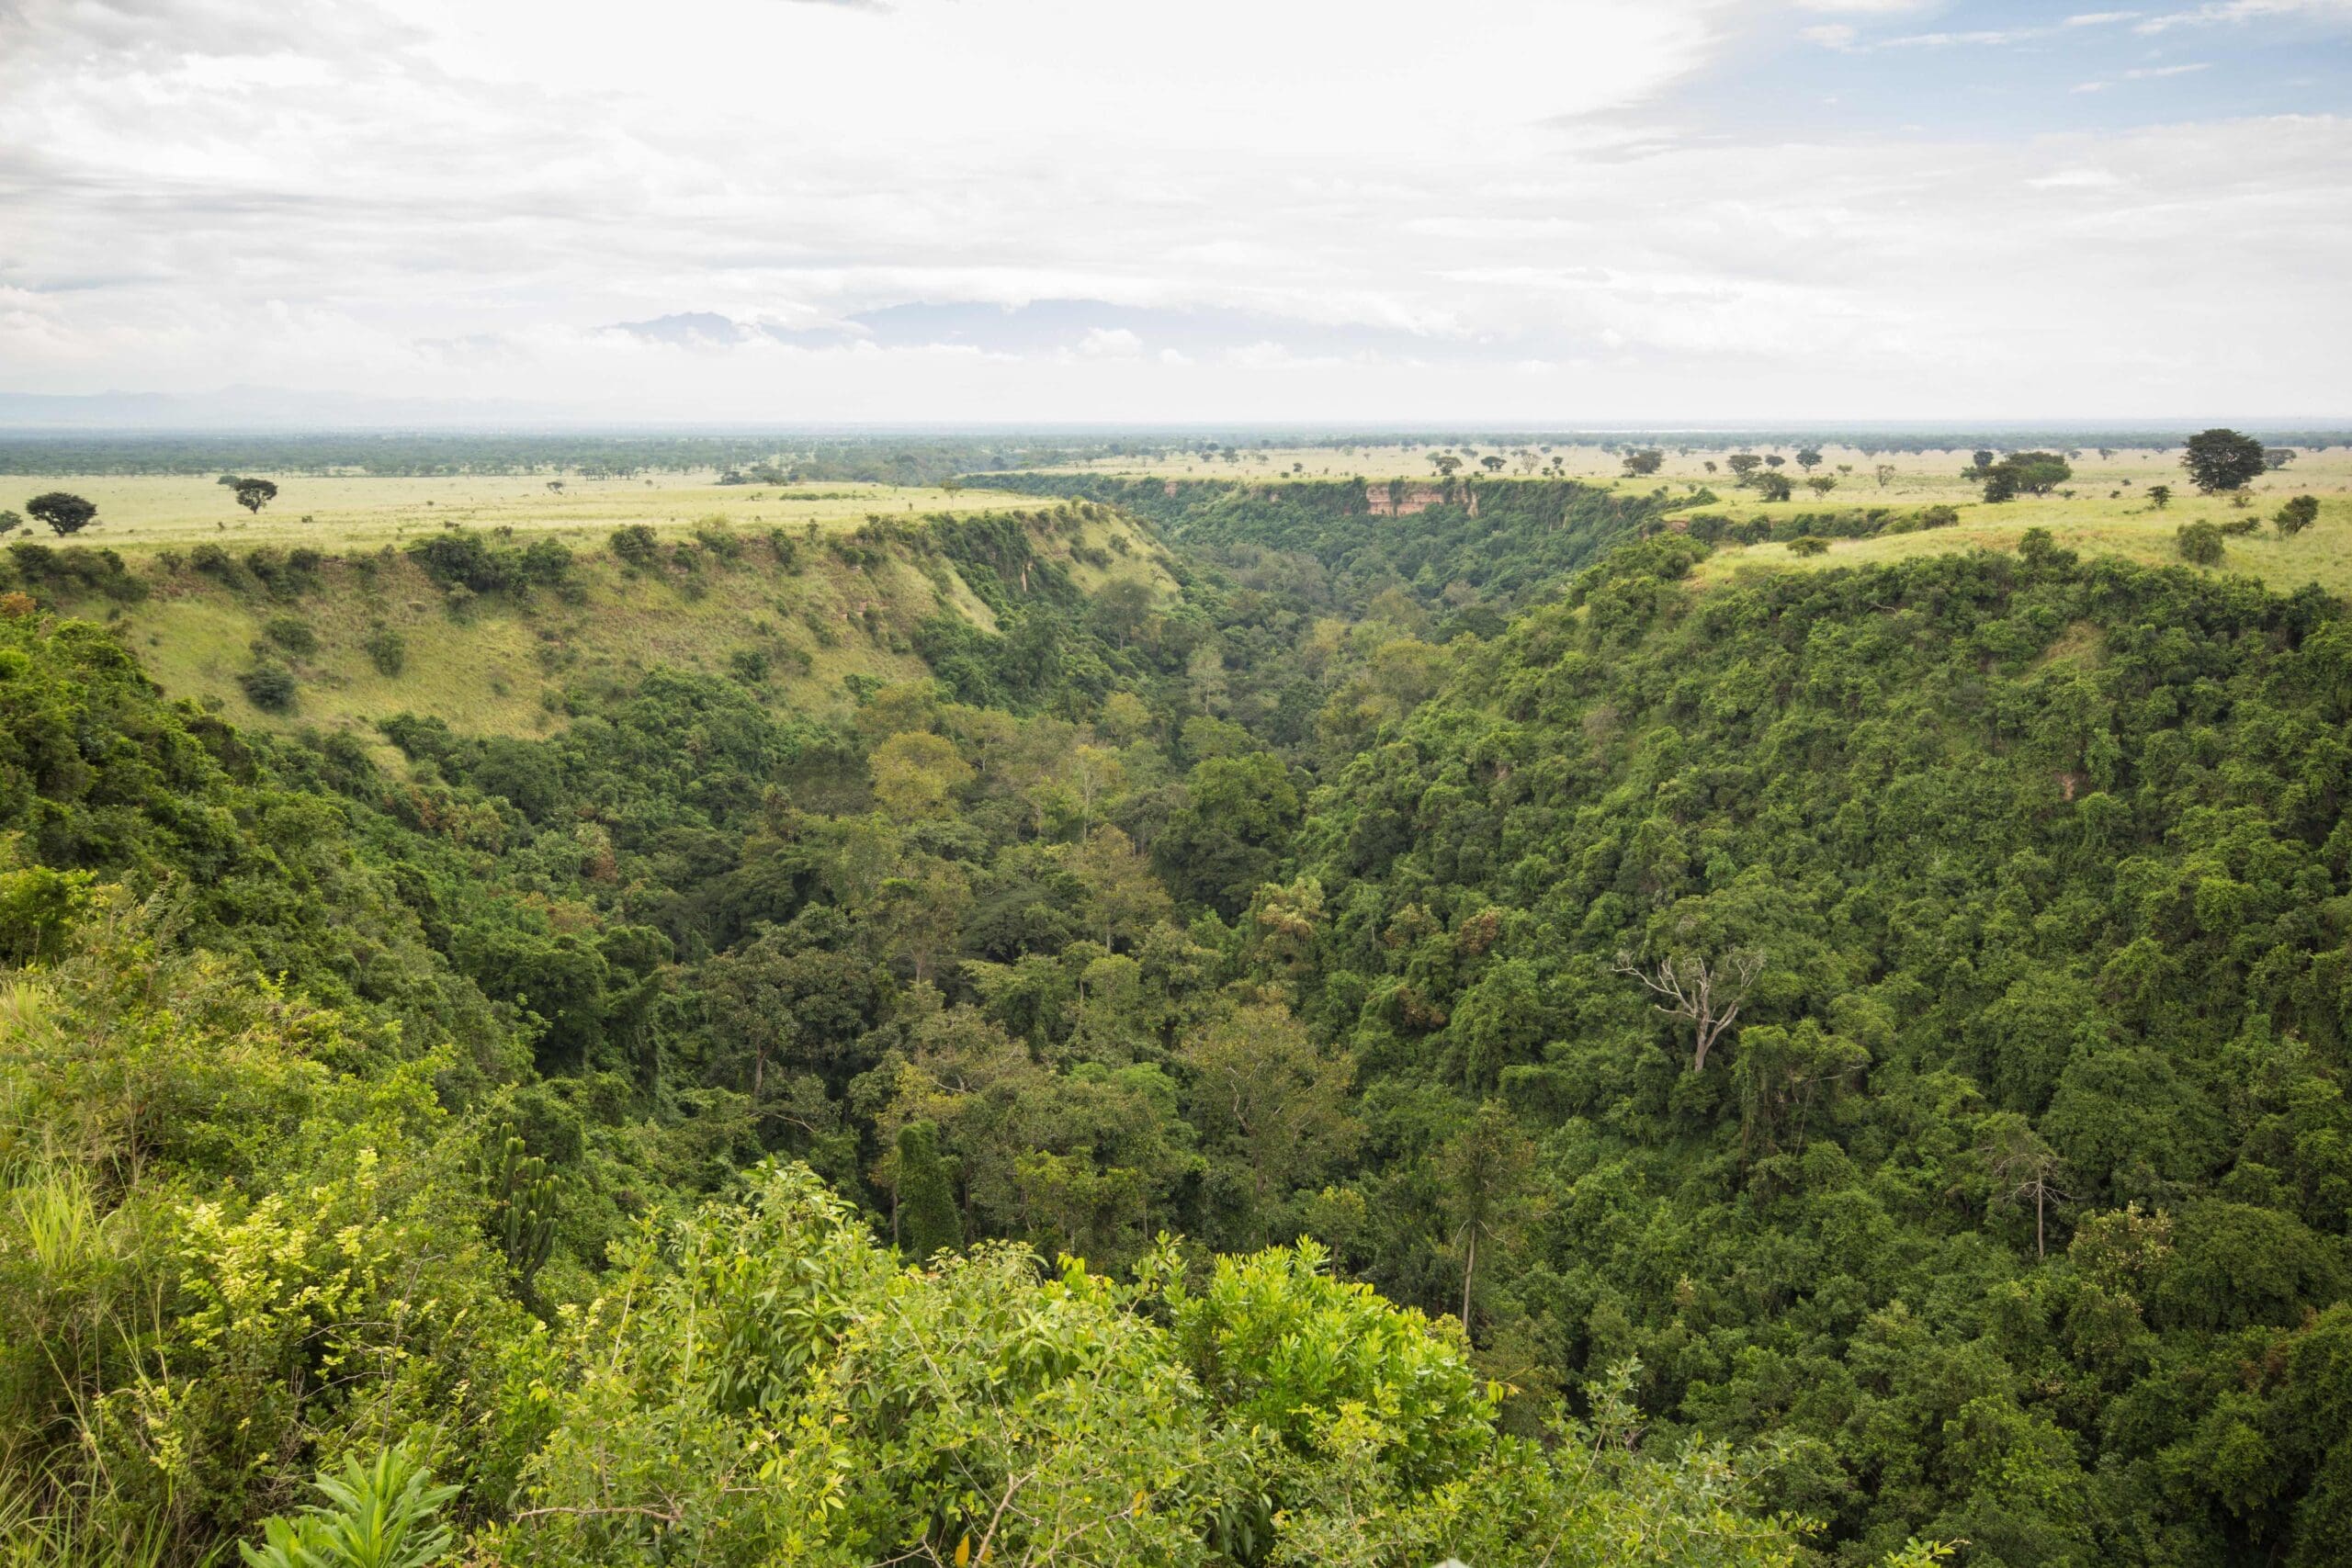 Kyambura wildlife reserve